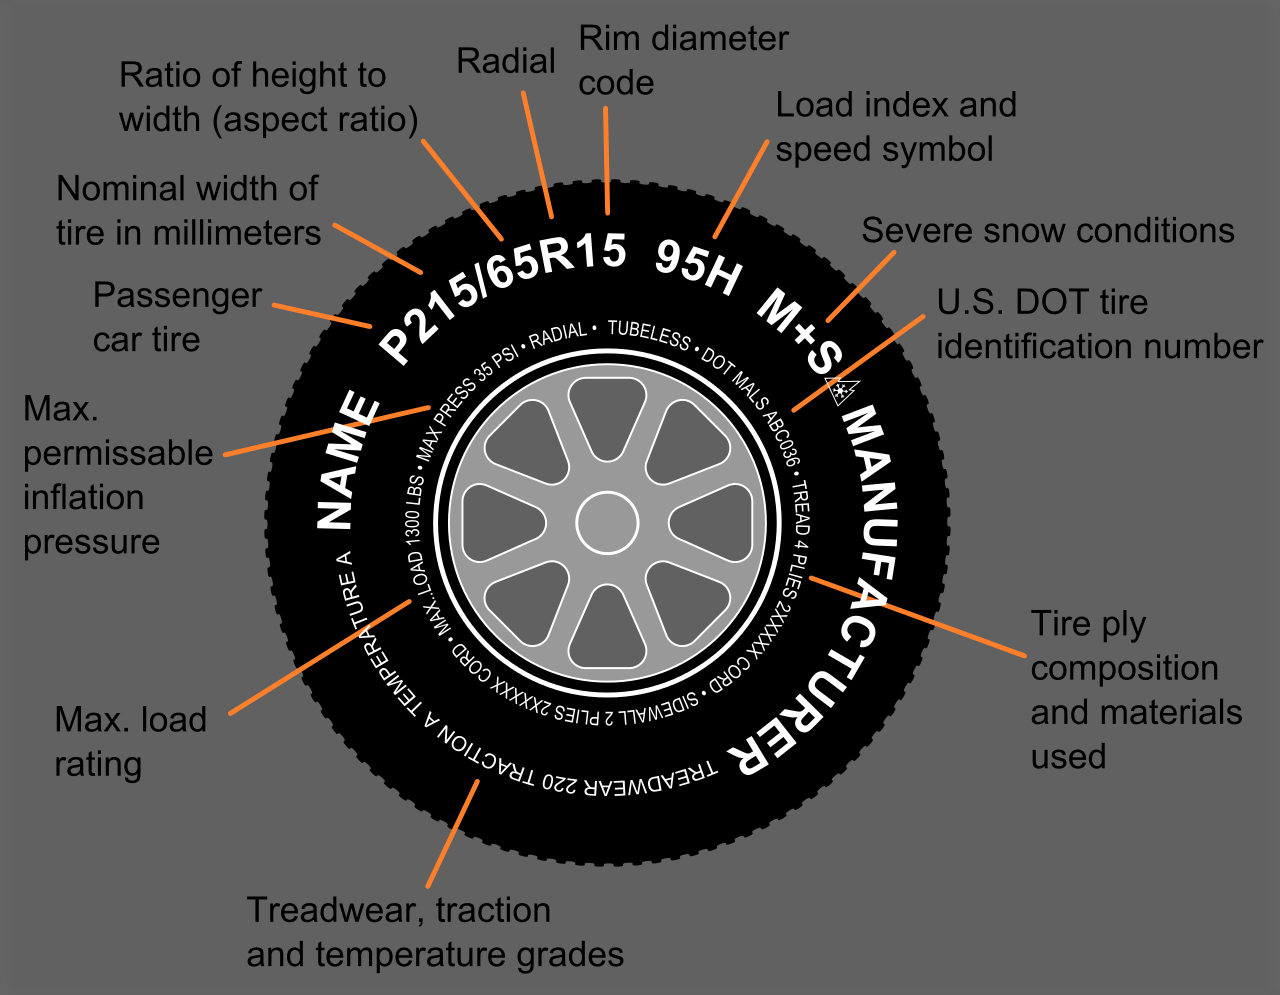 Automobile Tire Codes Mechanicstips